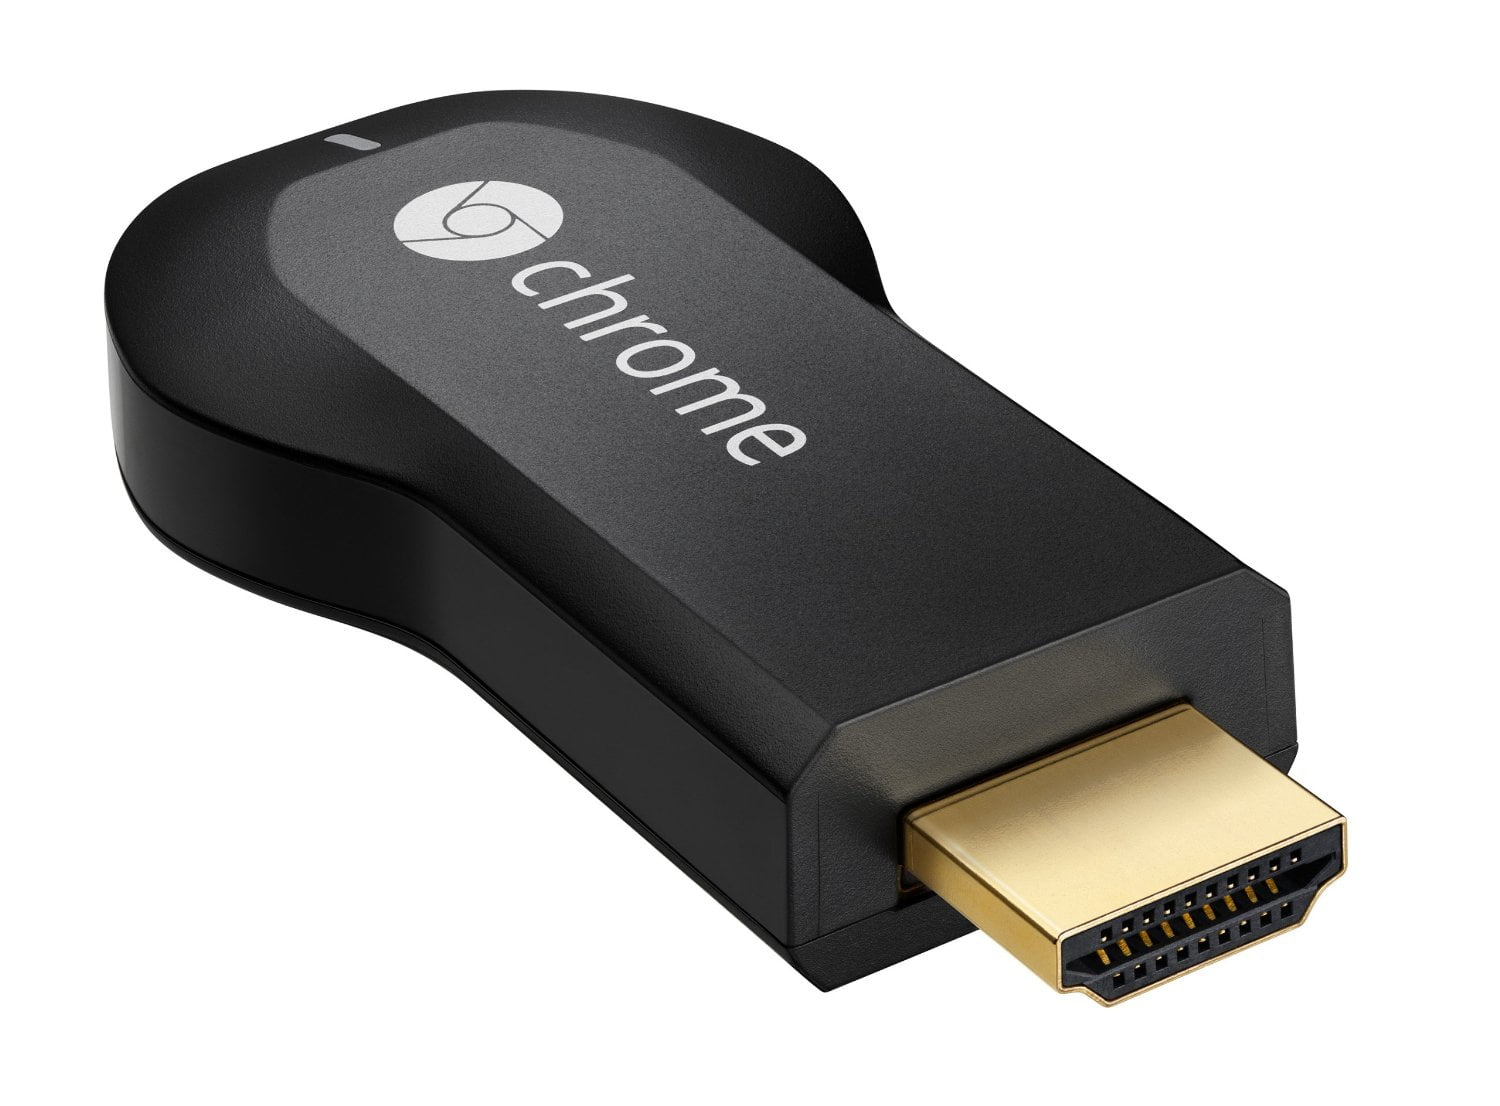 svimmel Skygge Incubus Google GA3A00028A14 HDMI Streaming Media Player Chromecast - Walmart.com